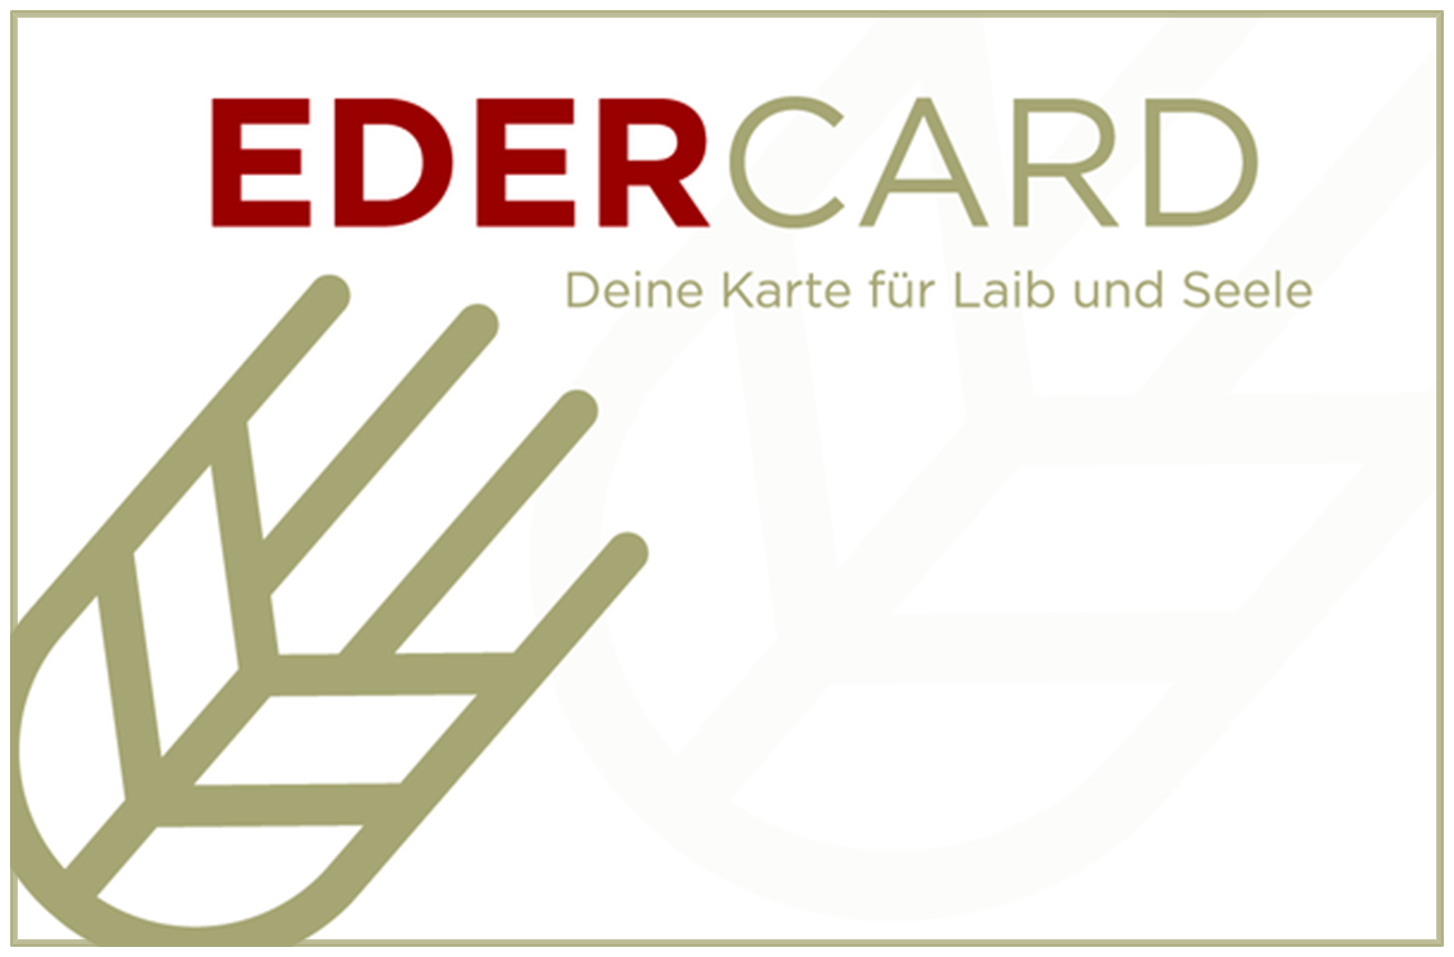 Edercard